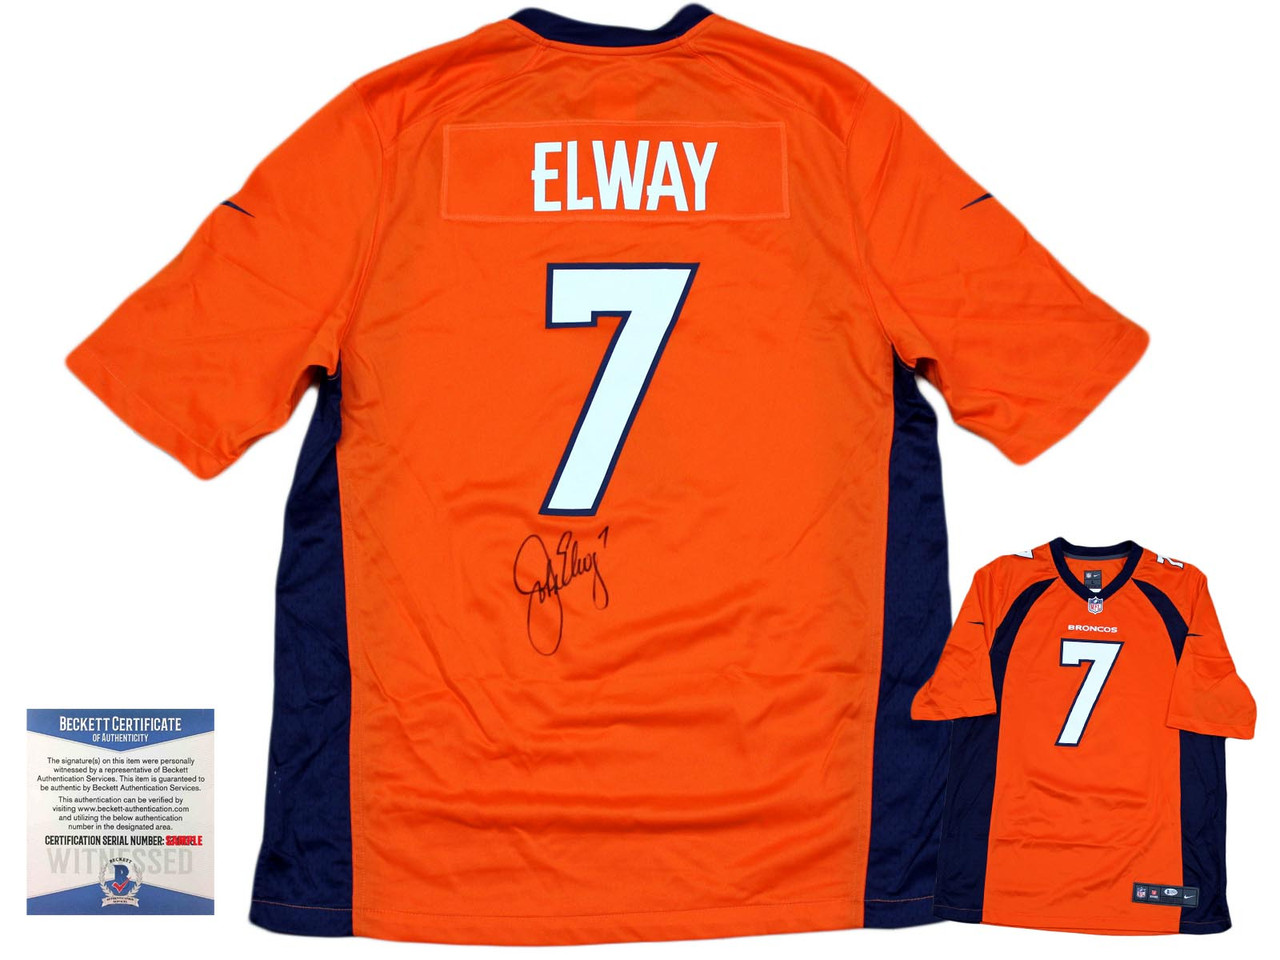 john elway autographed jersey